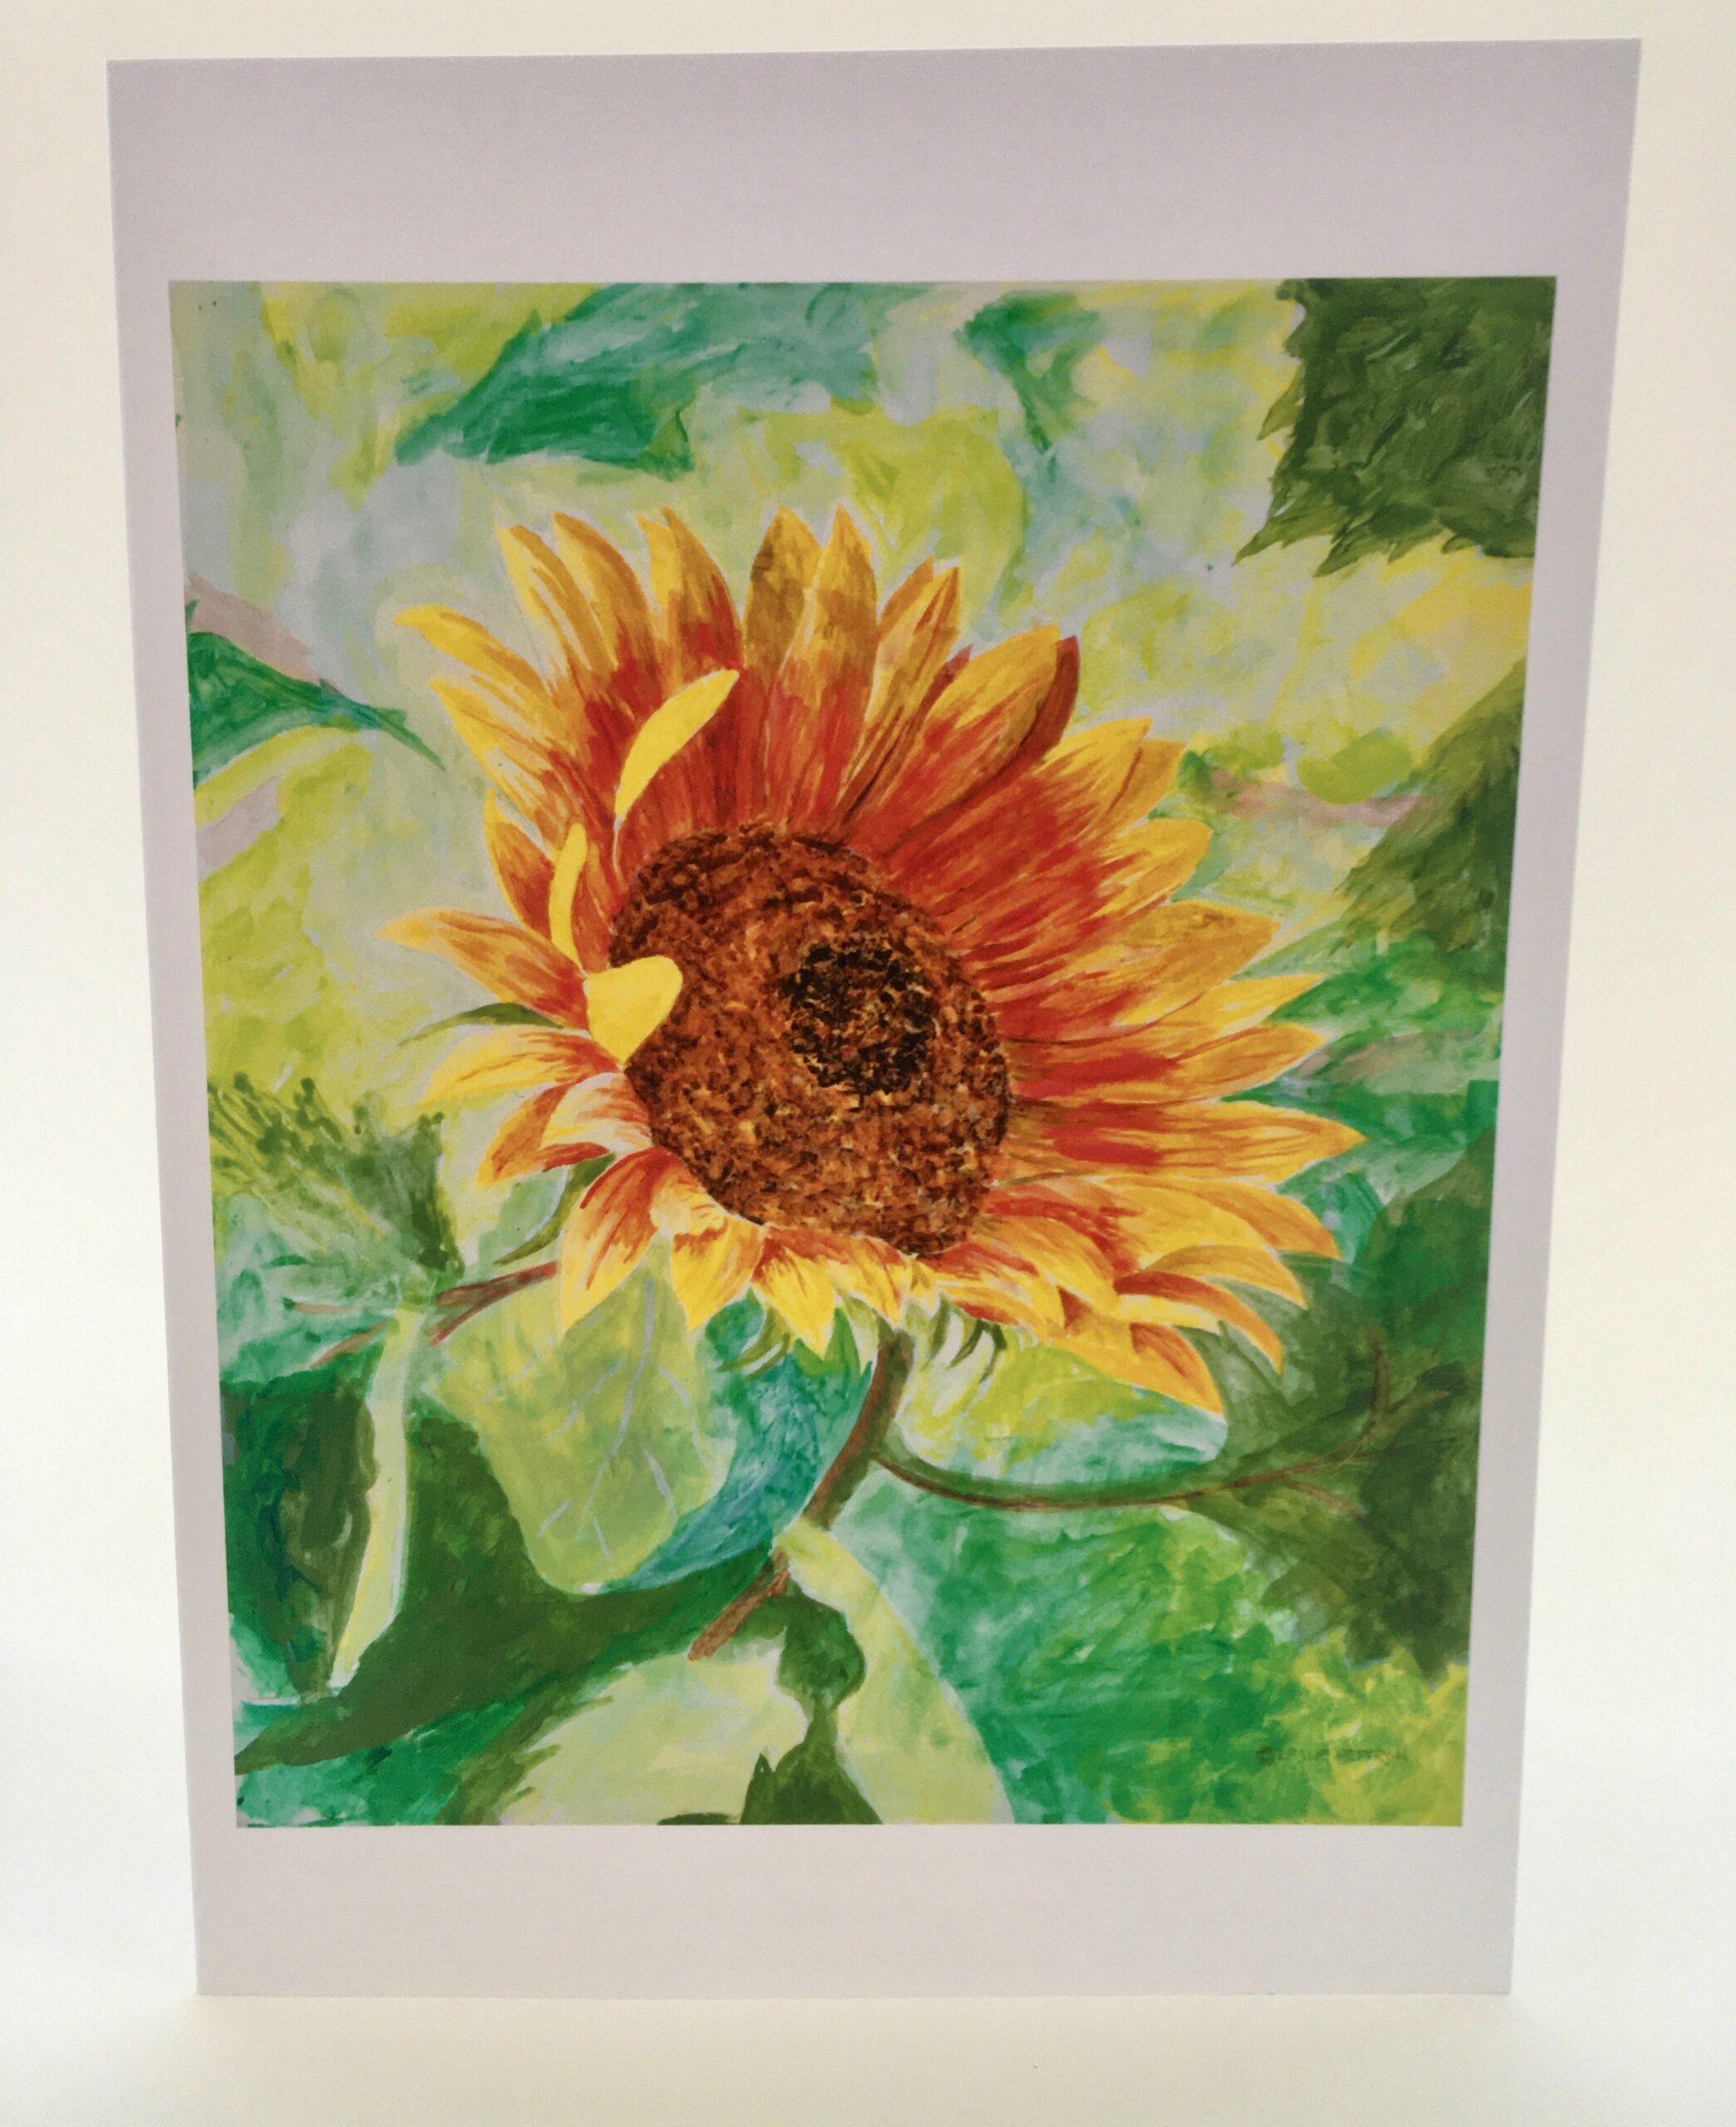 Notecards by Leslie Heffron, "Sunflower"